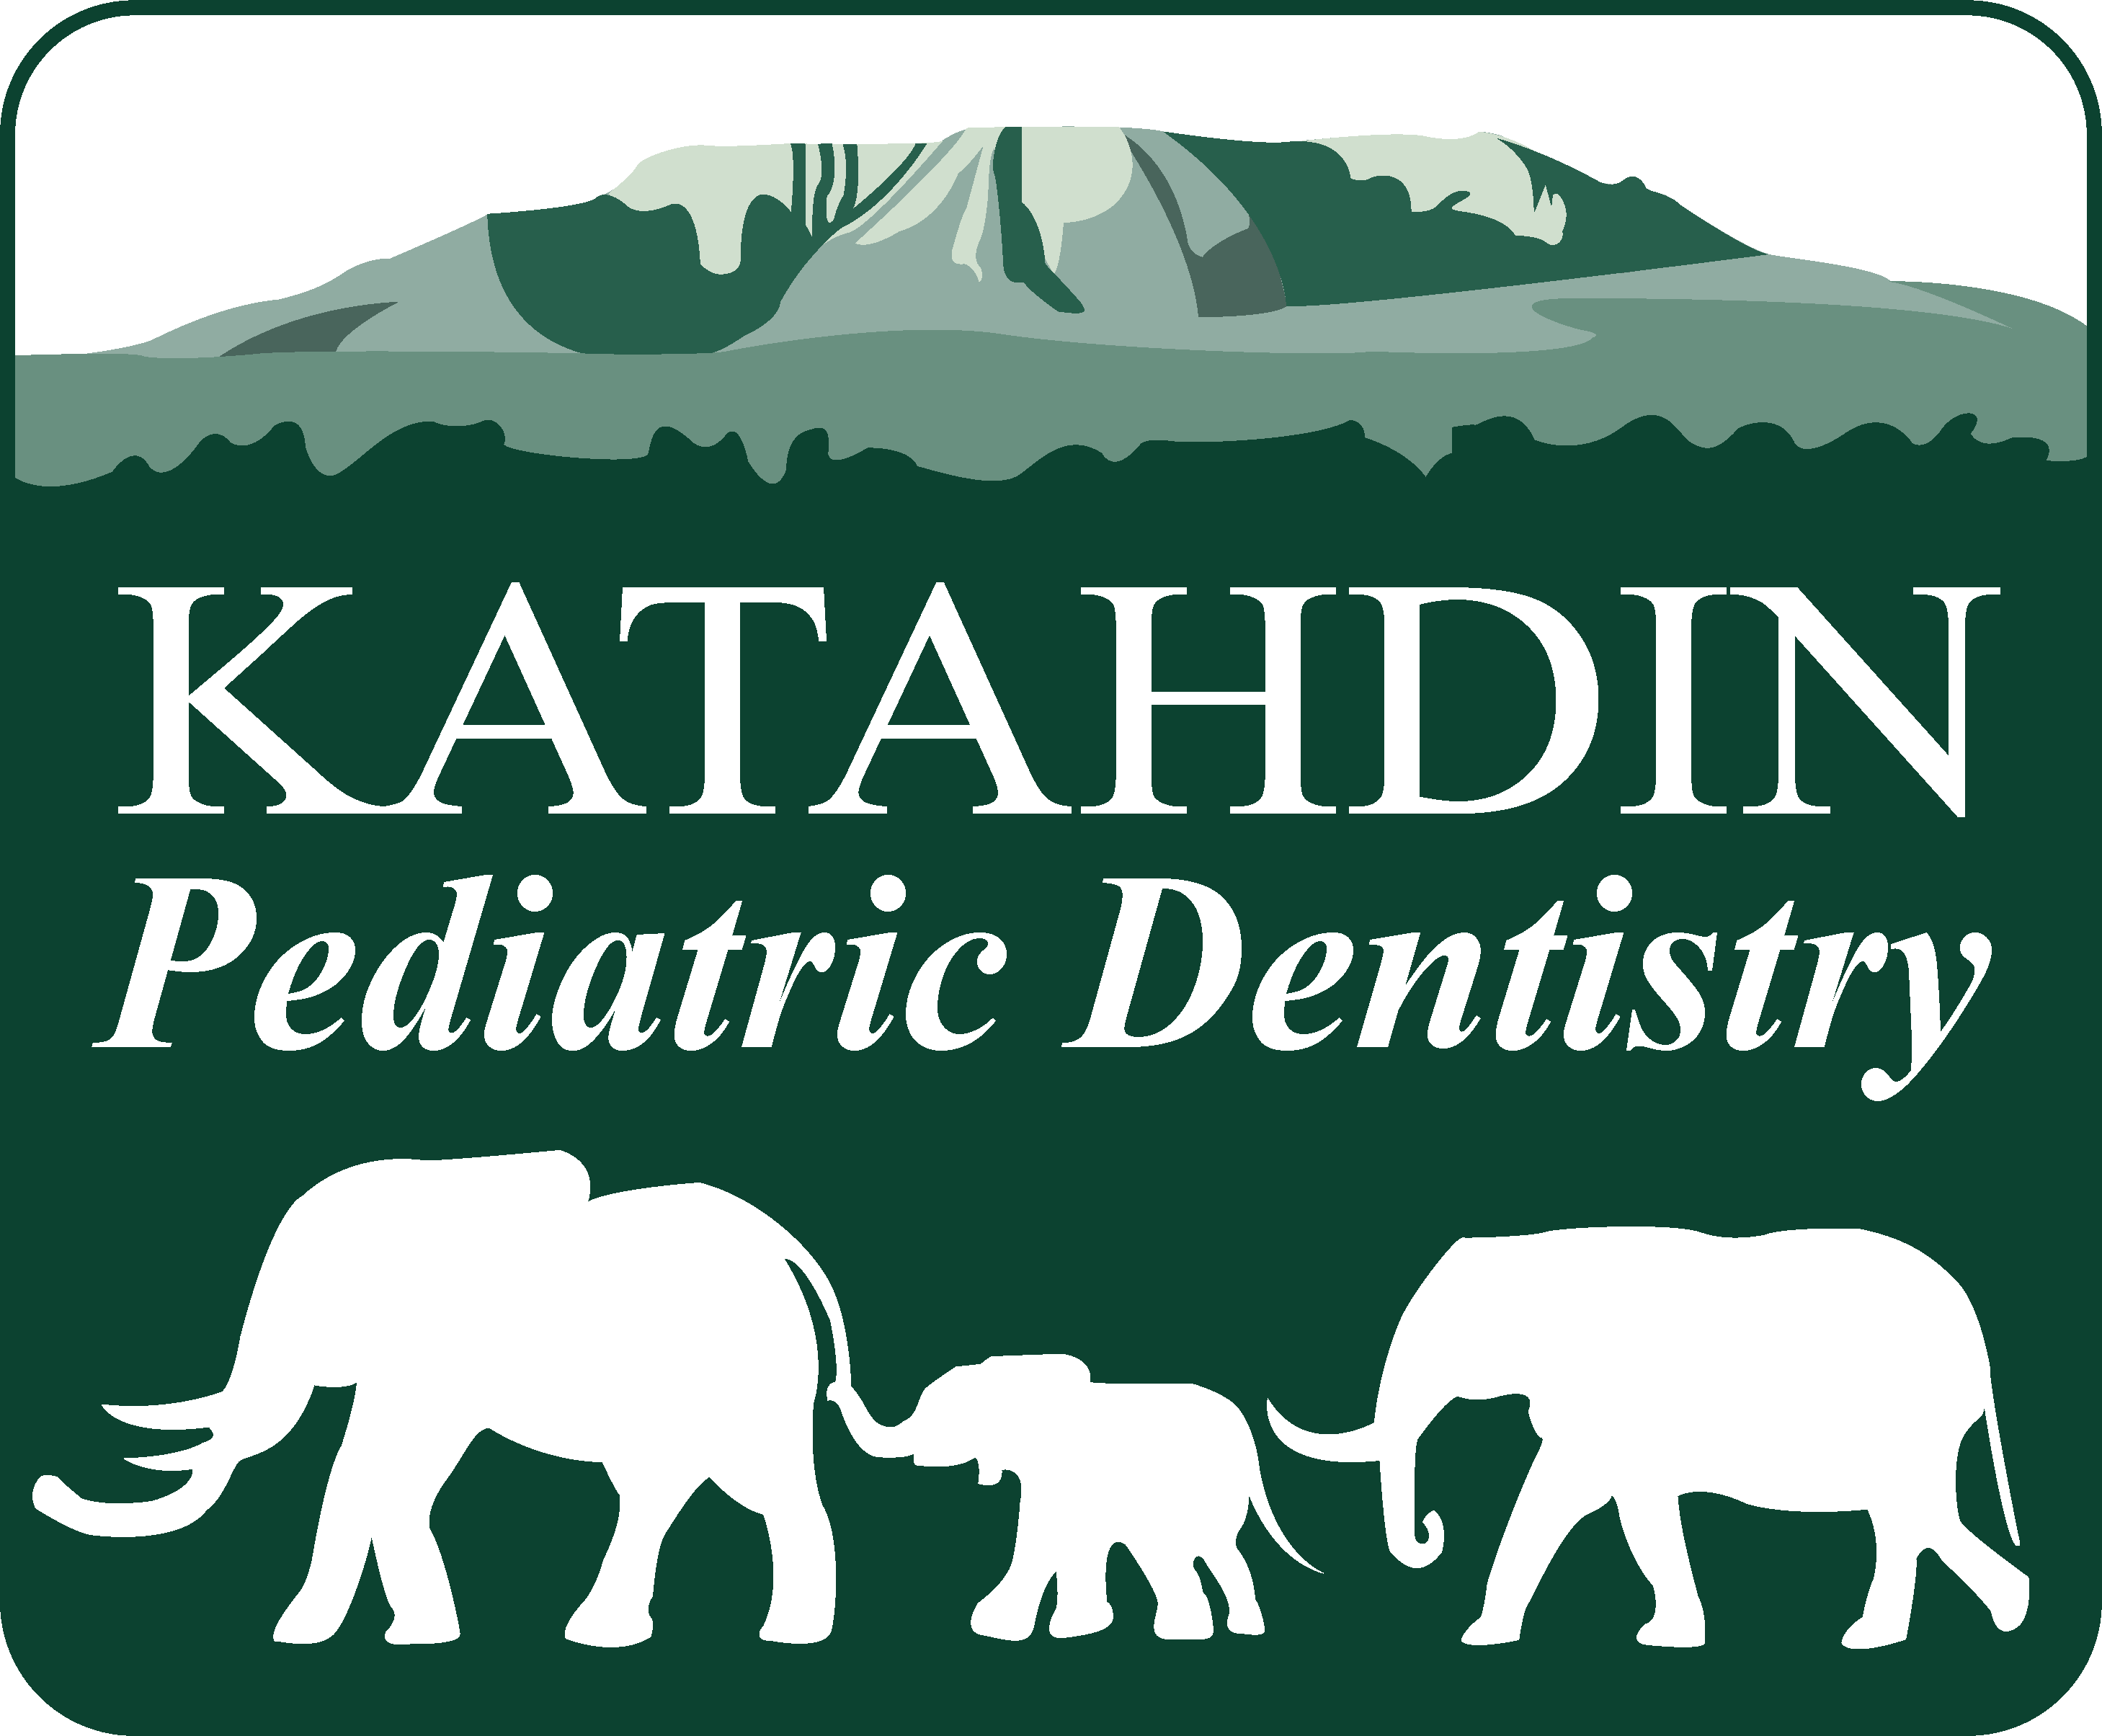 Katahdin Pediatric Dentistry